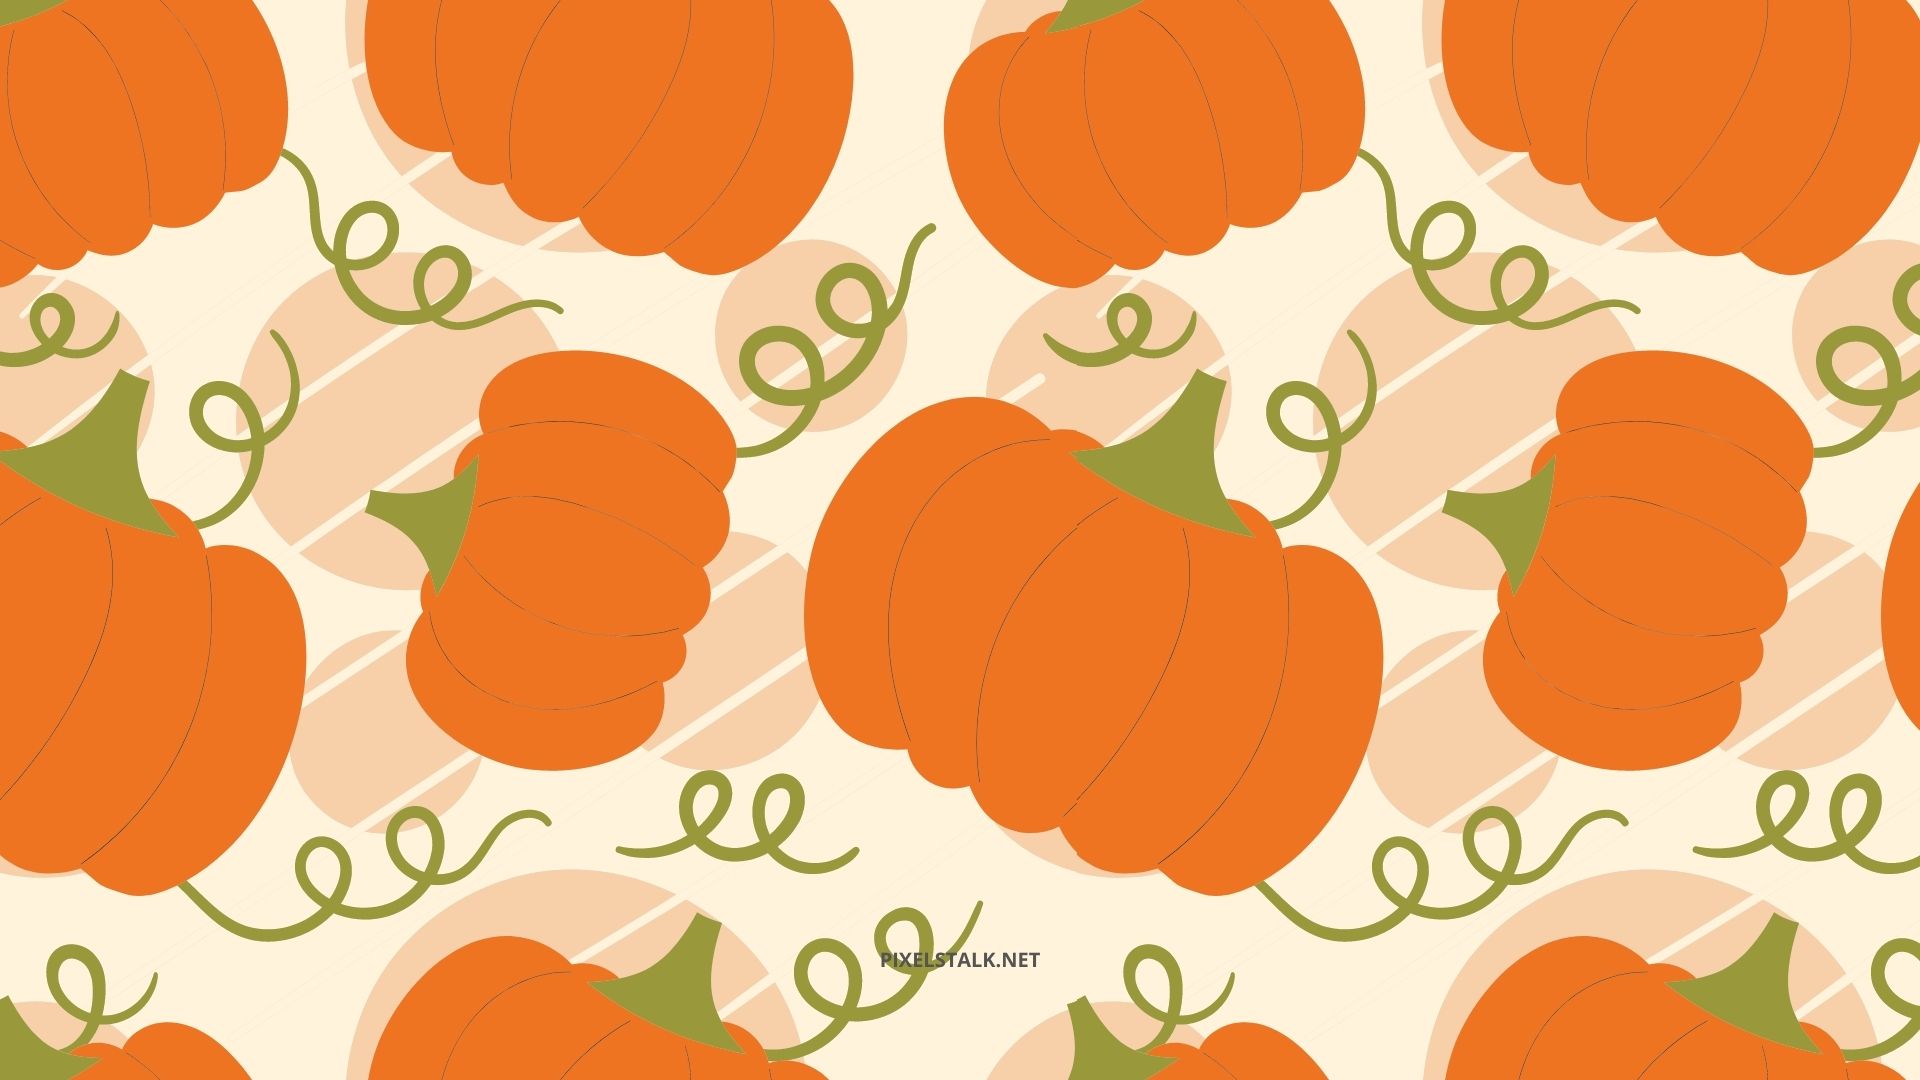 140792 Pumpkin Wallpaper Images Stock Photos  Vectors  Shutterstock